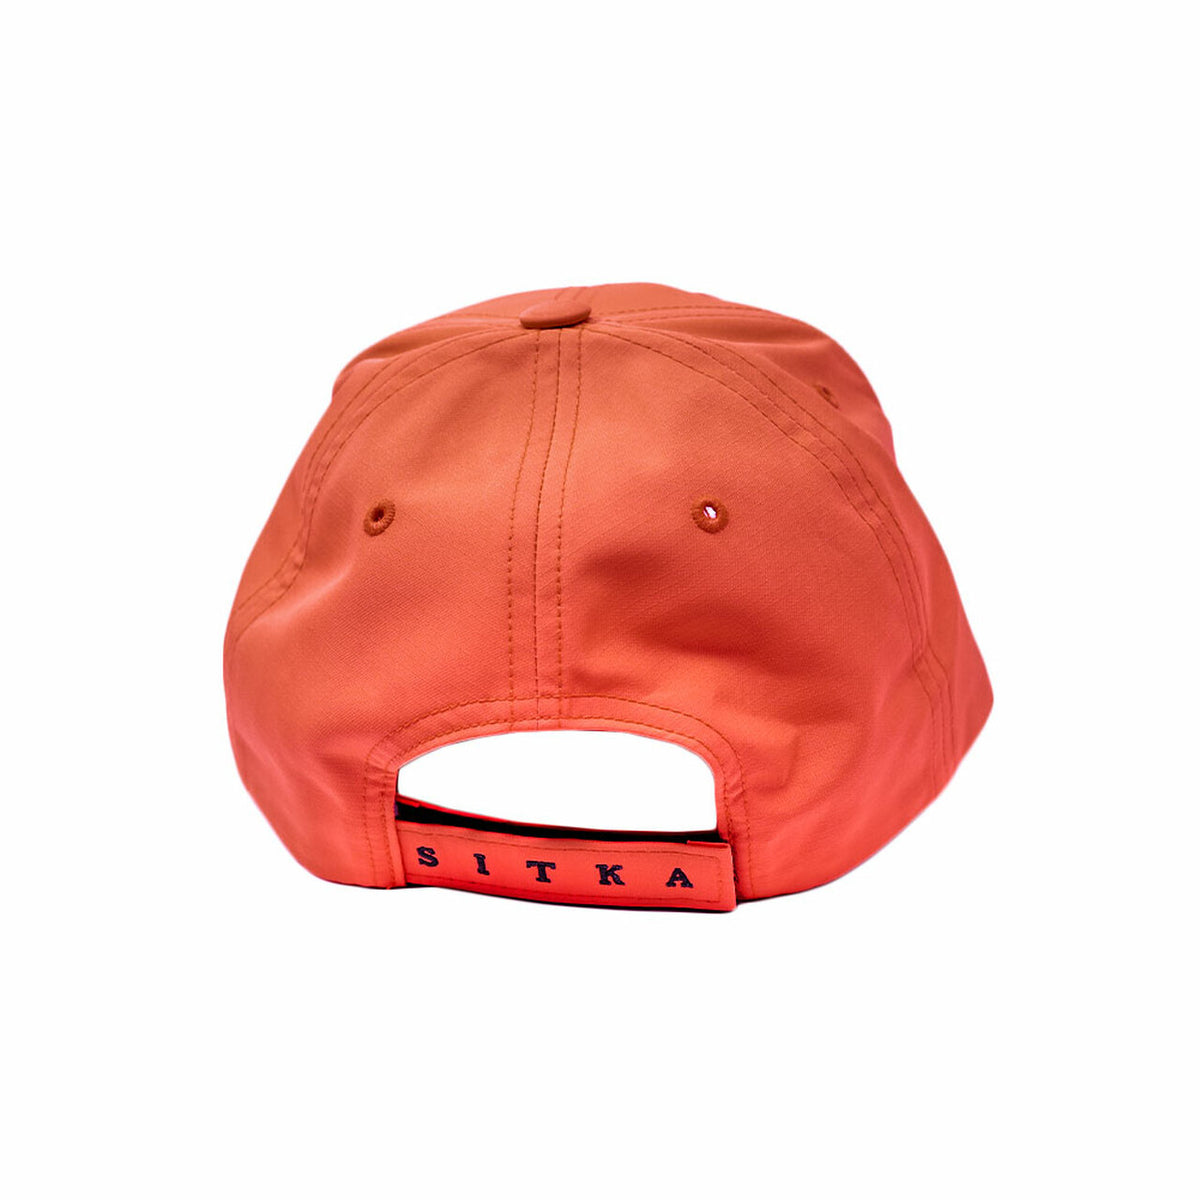 Sitka - Hat - Ballistic Side Logo Cap Blaze Orange One Size Fits All